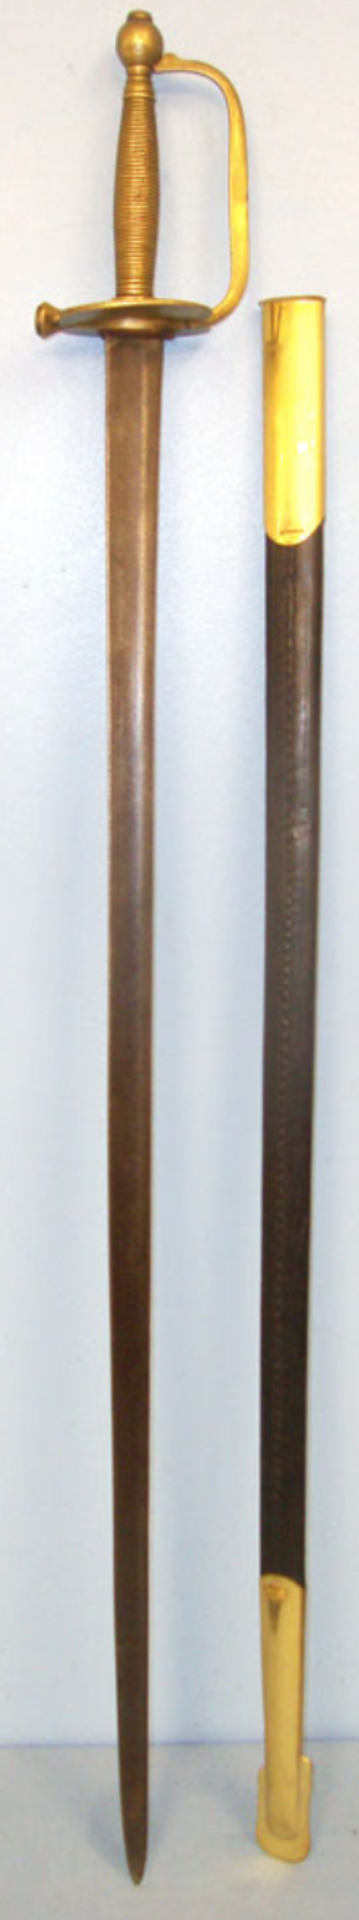 American Civil War Era Model 1840 NCO's Sword With Scabbard - Image 2 of 3